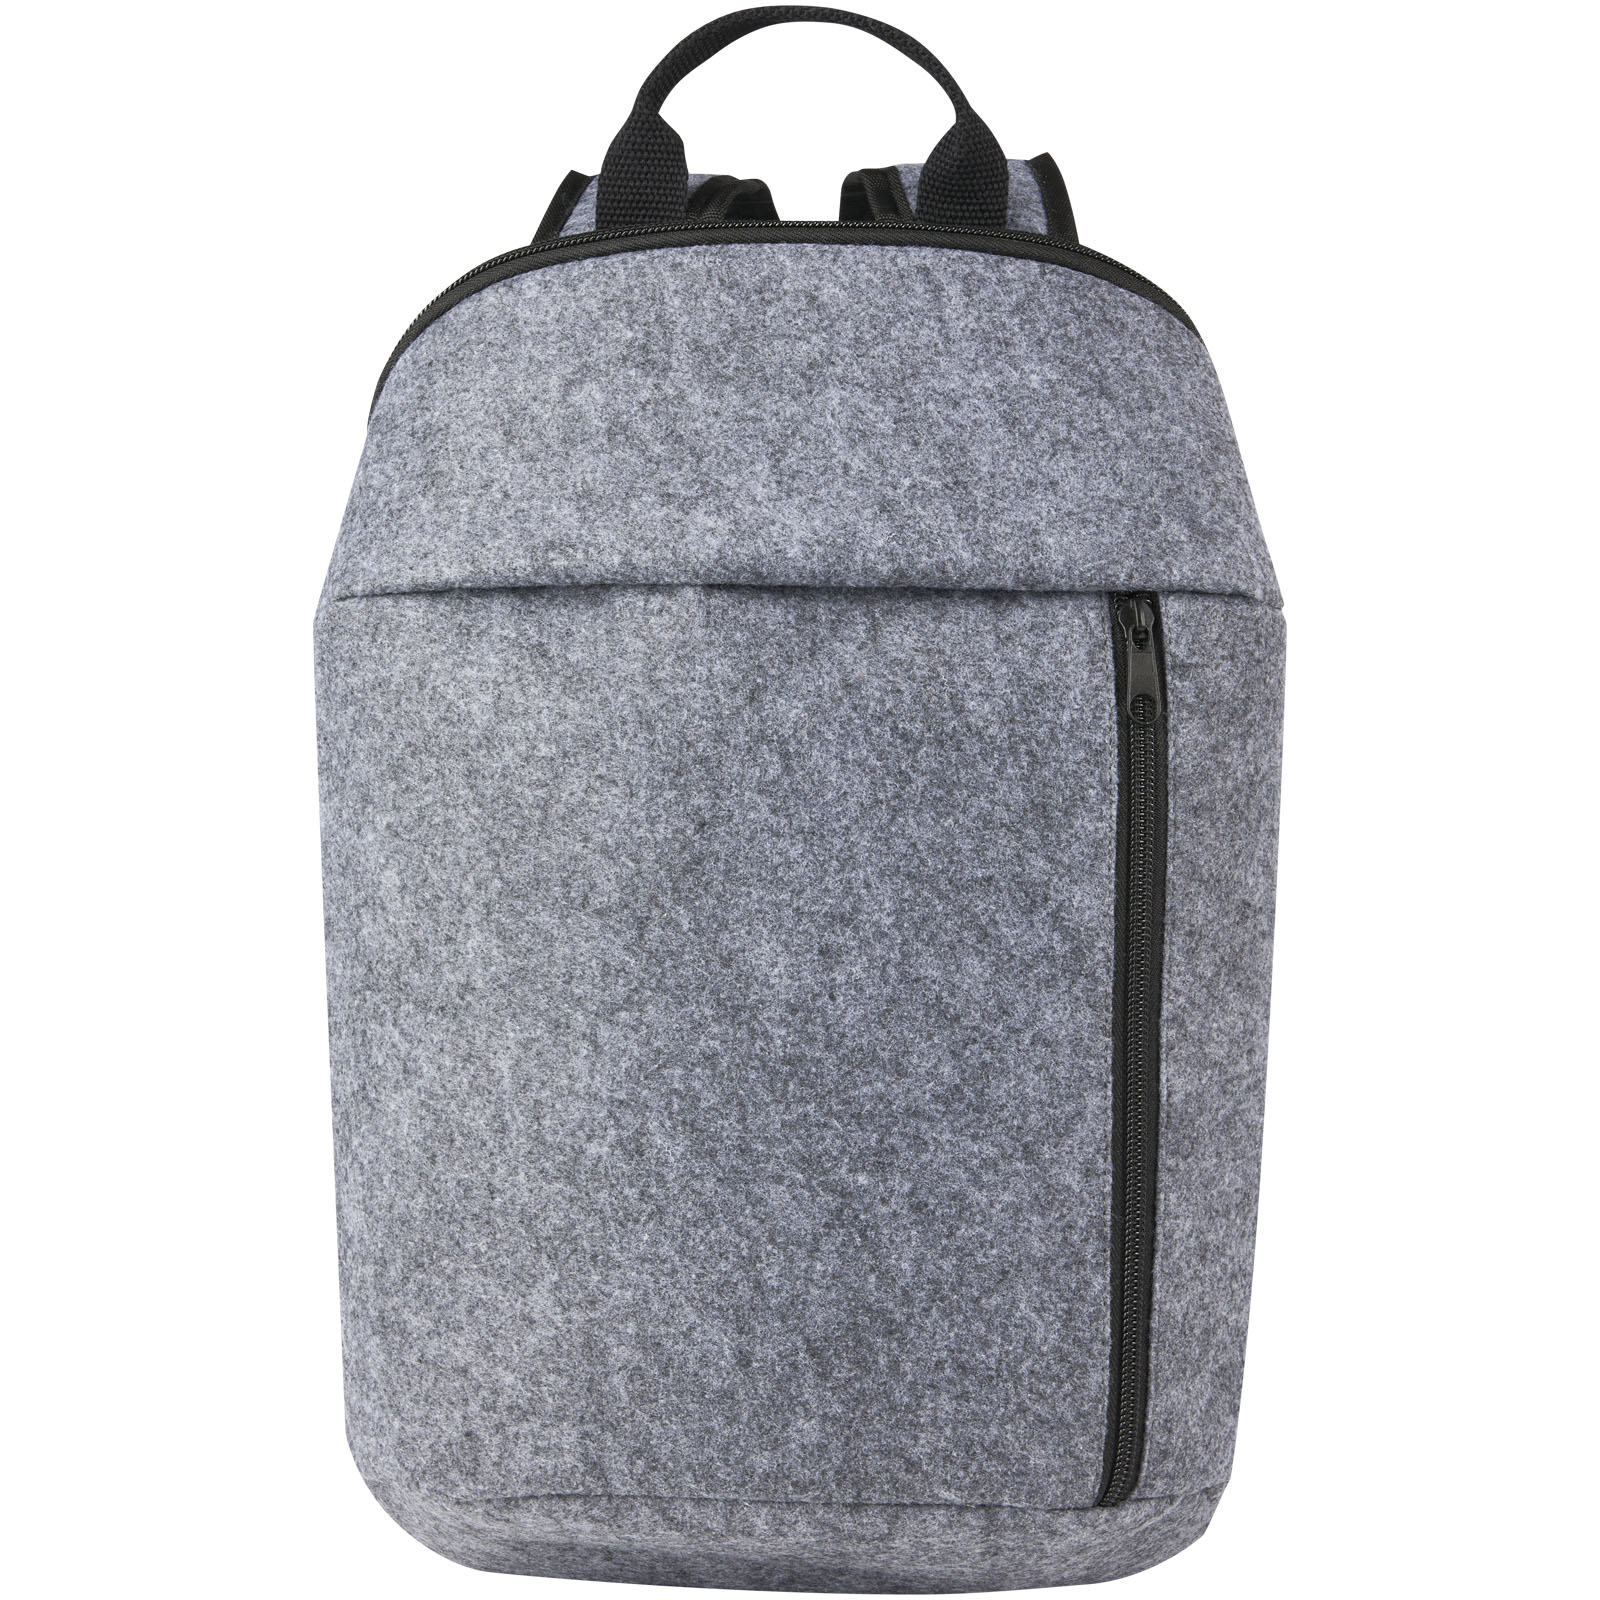 Advertising Cooler bags - Felta GRS recycled felt cooler backpack 7L - 1